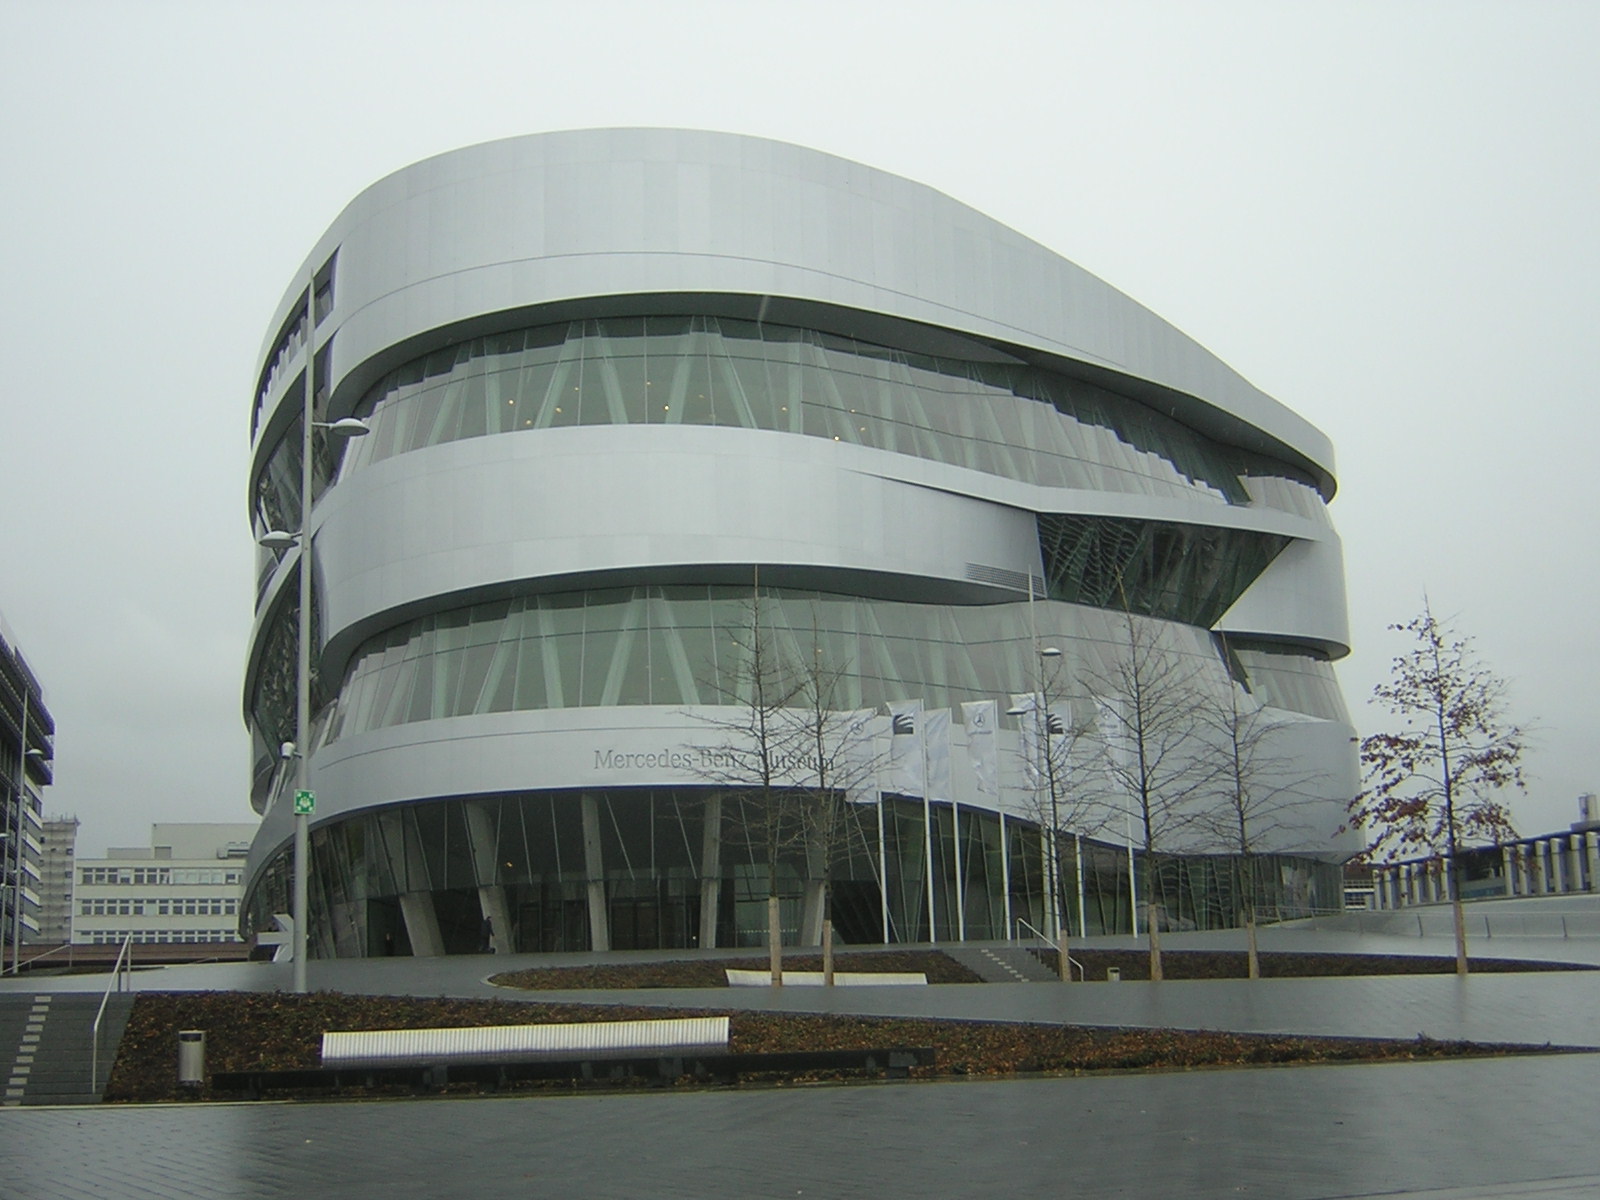 The Mercedes-Benz Museum